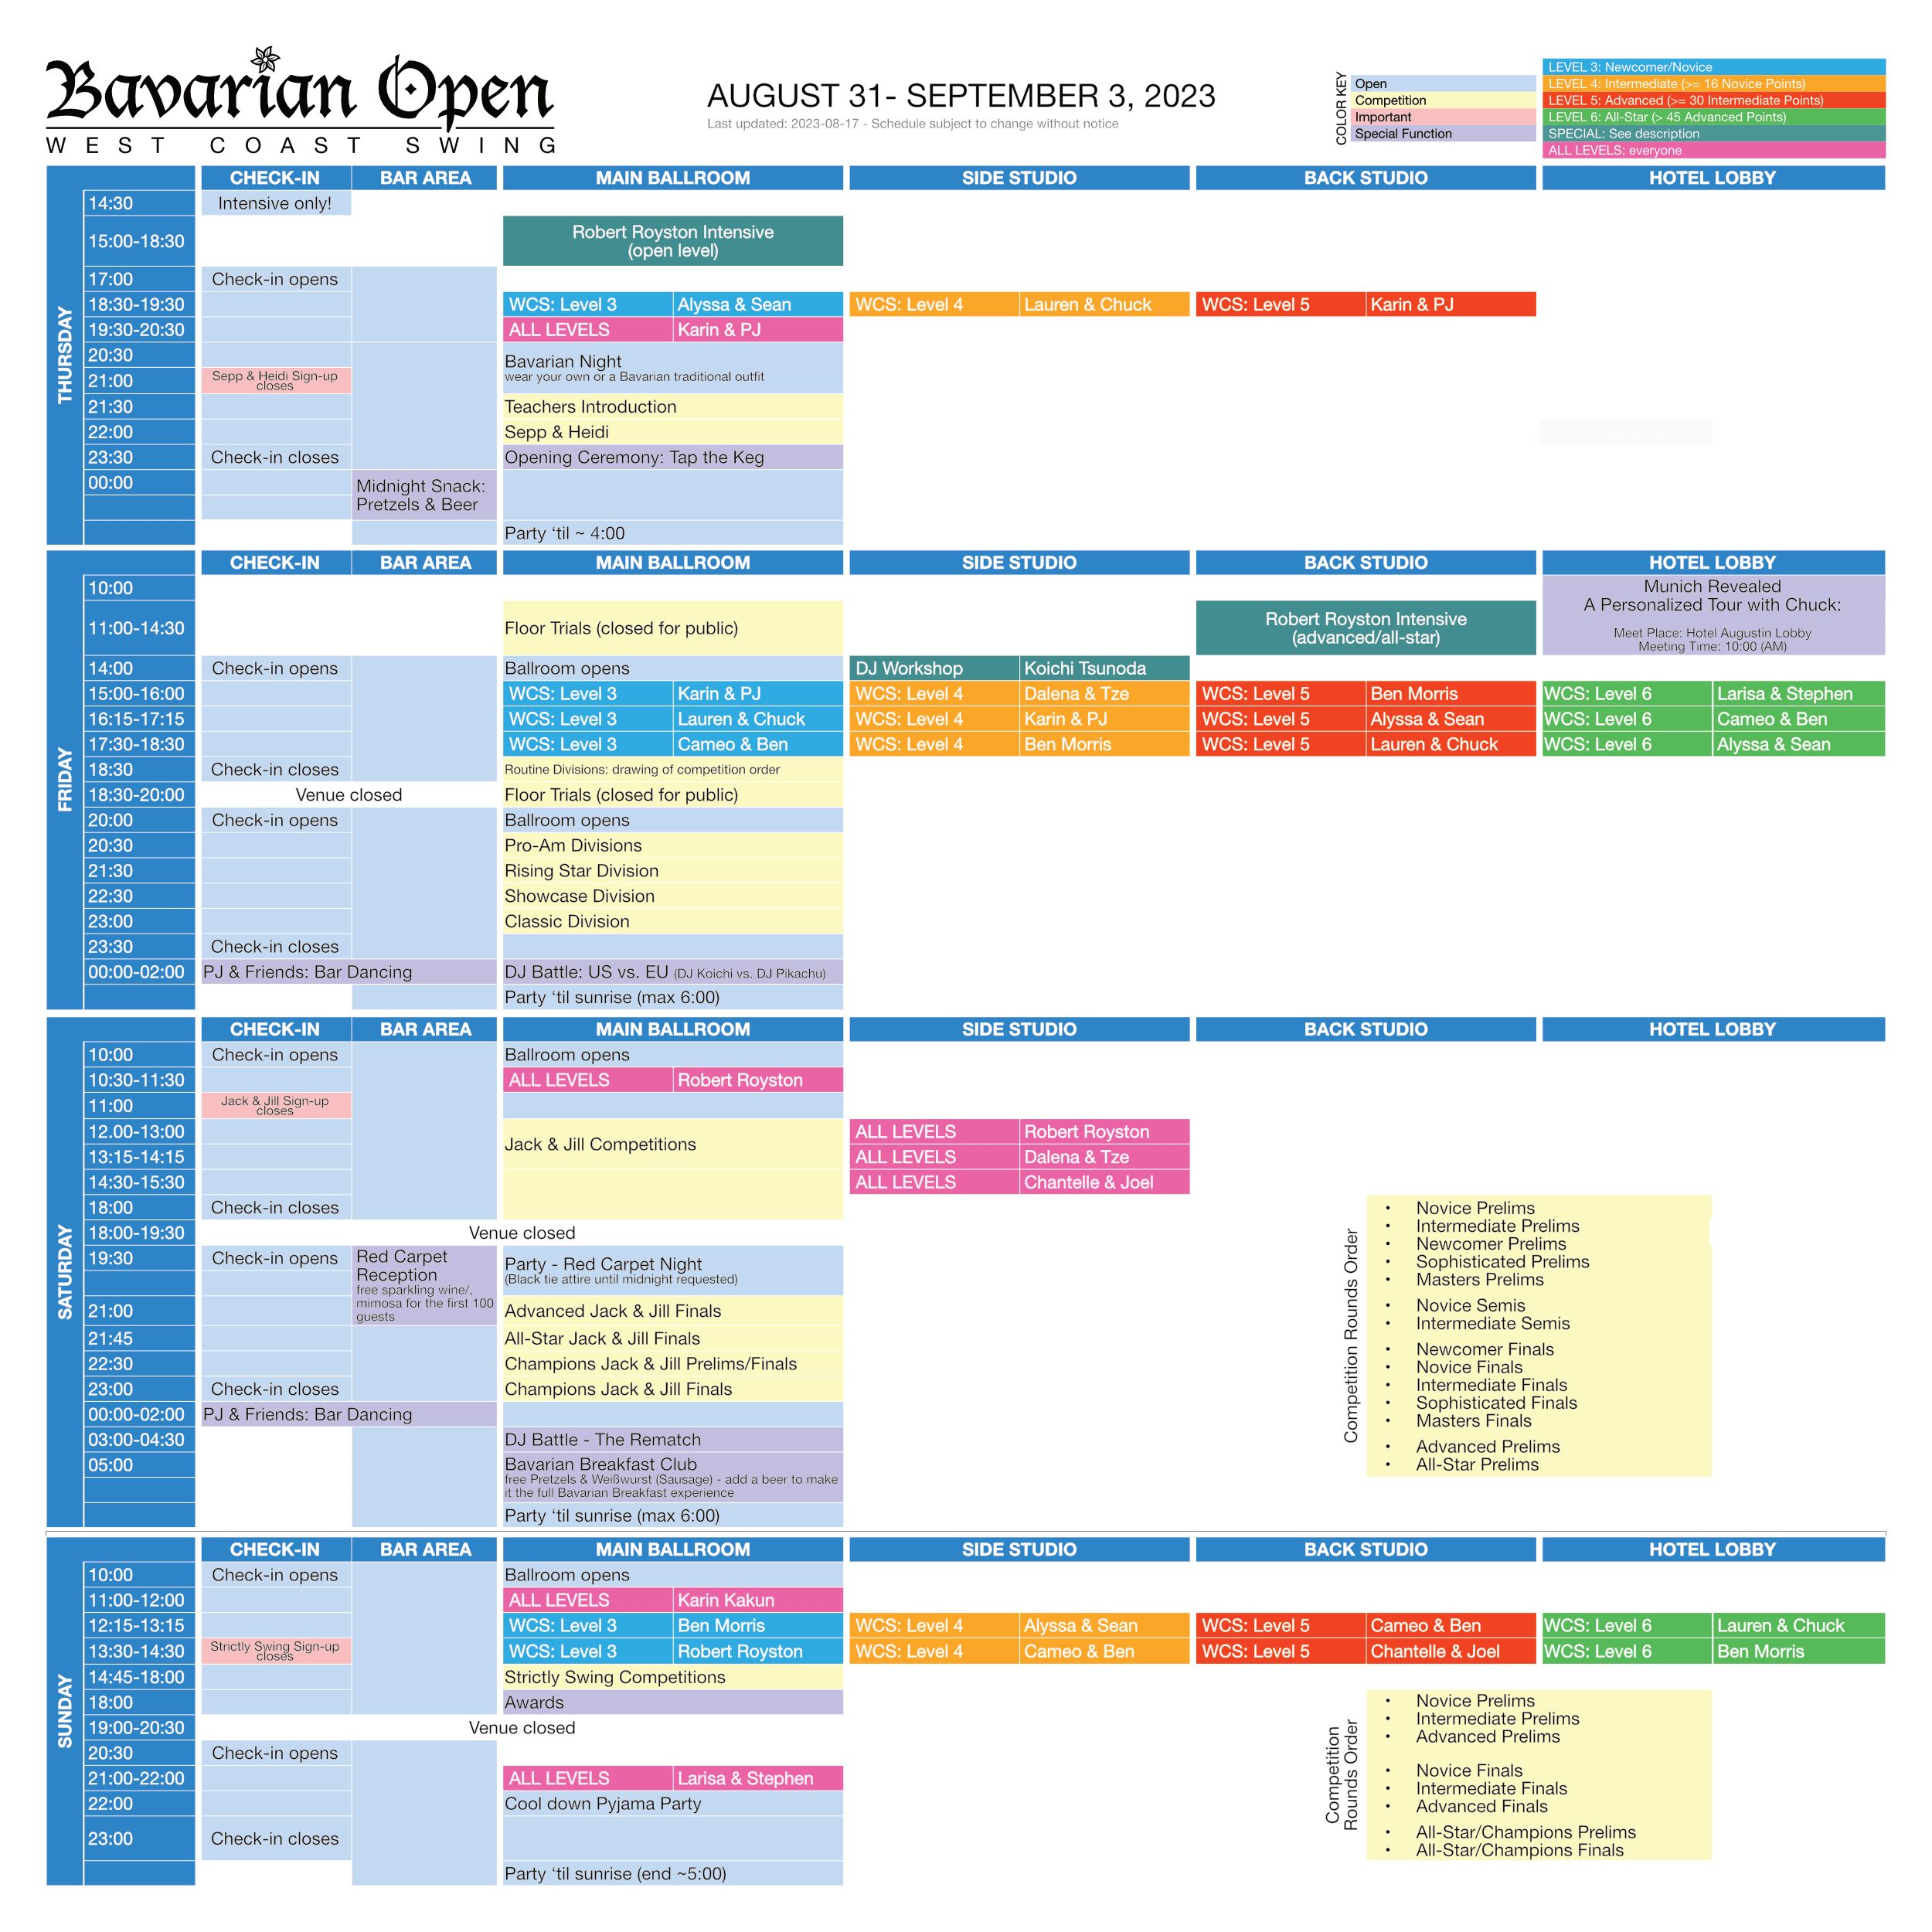 Bavarian Open 2023 Schedule